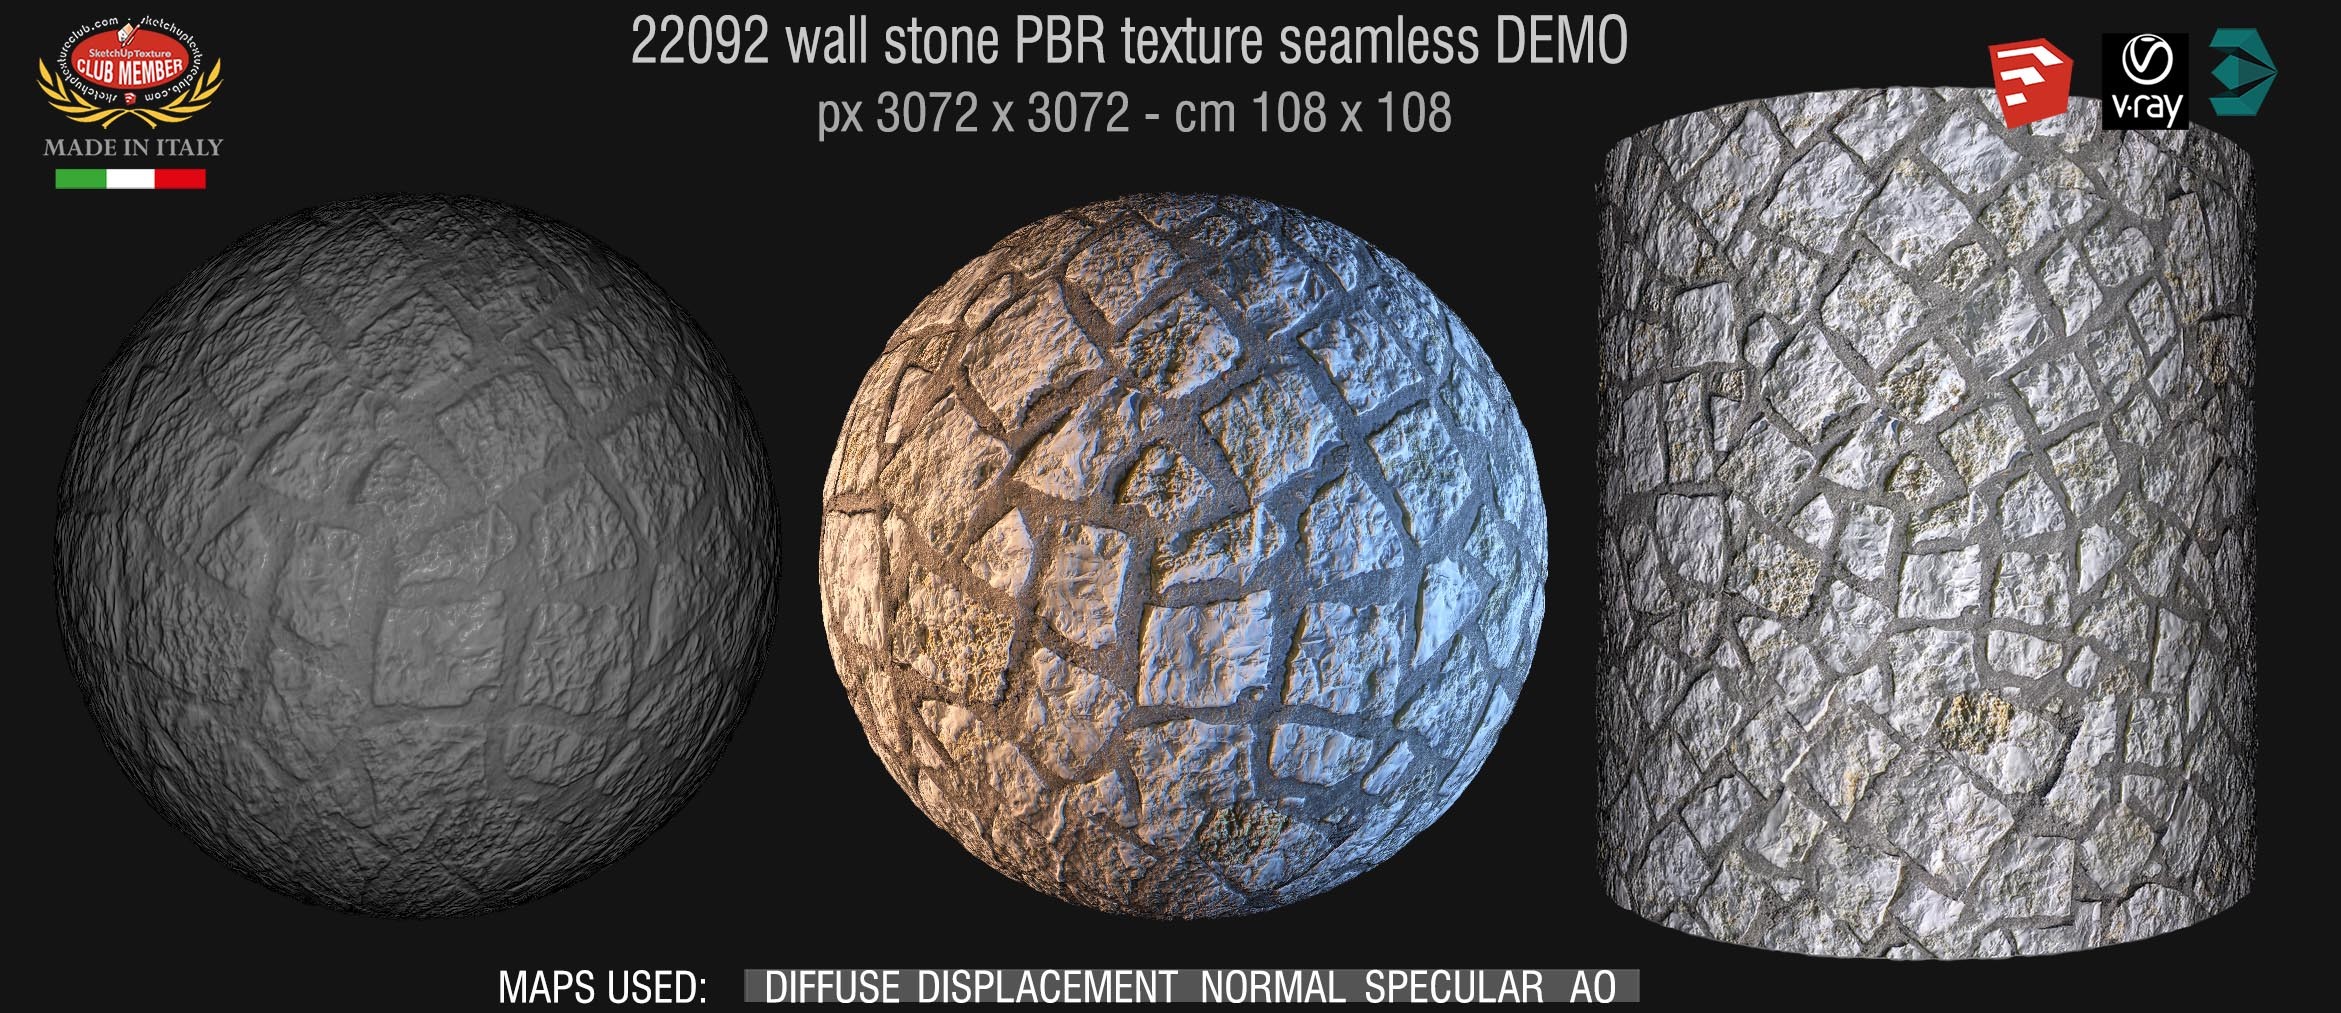 22092 wall stone PBR texture seamless DEMO